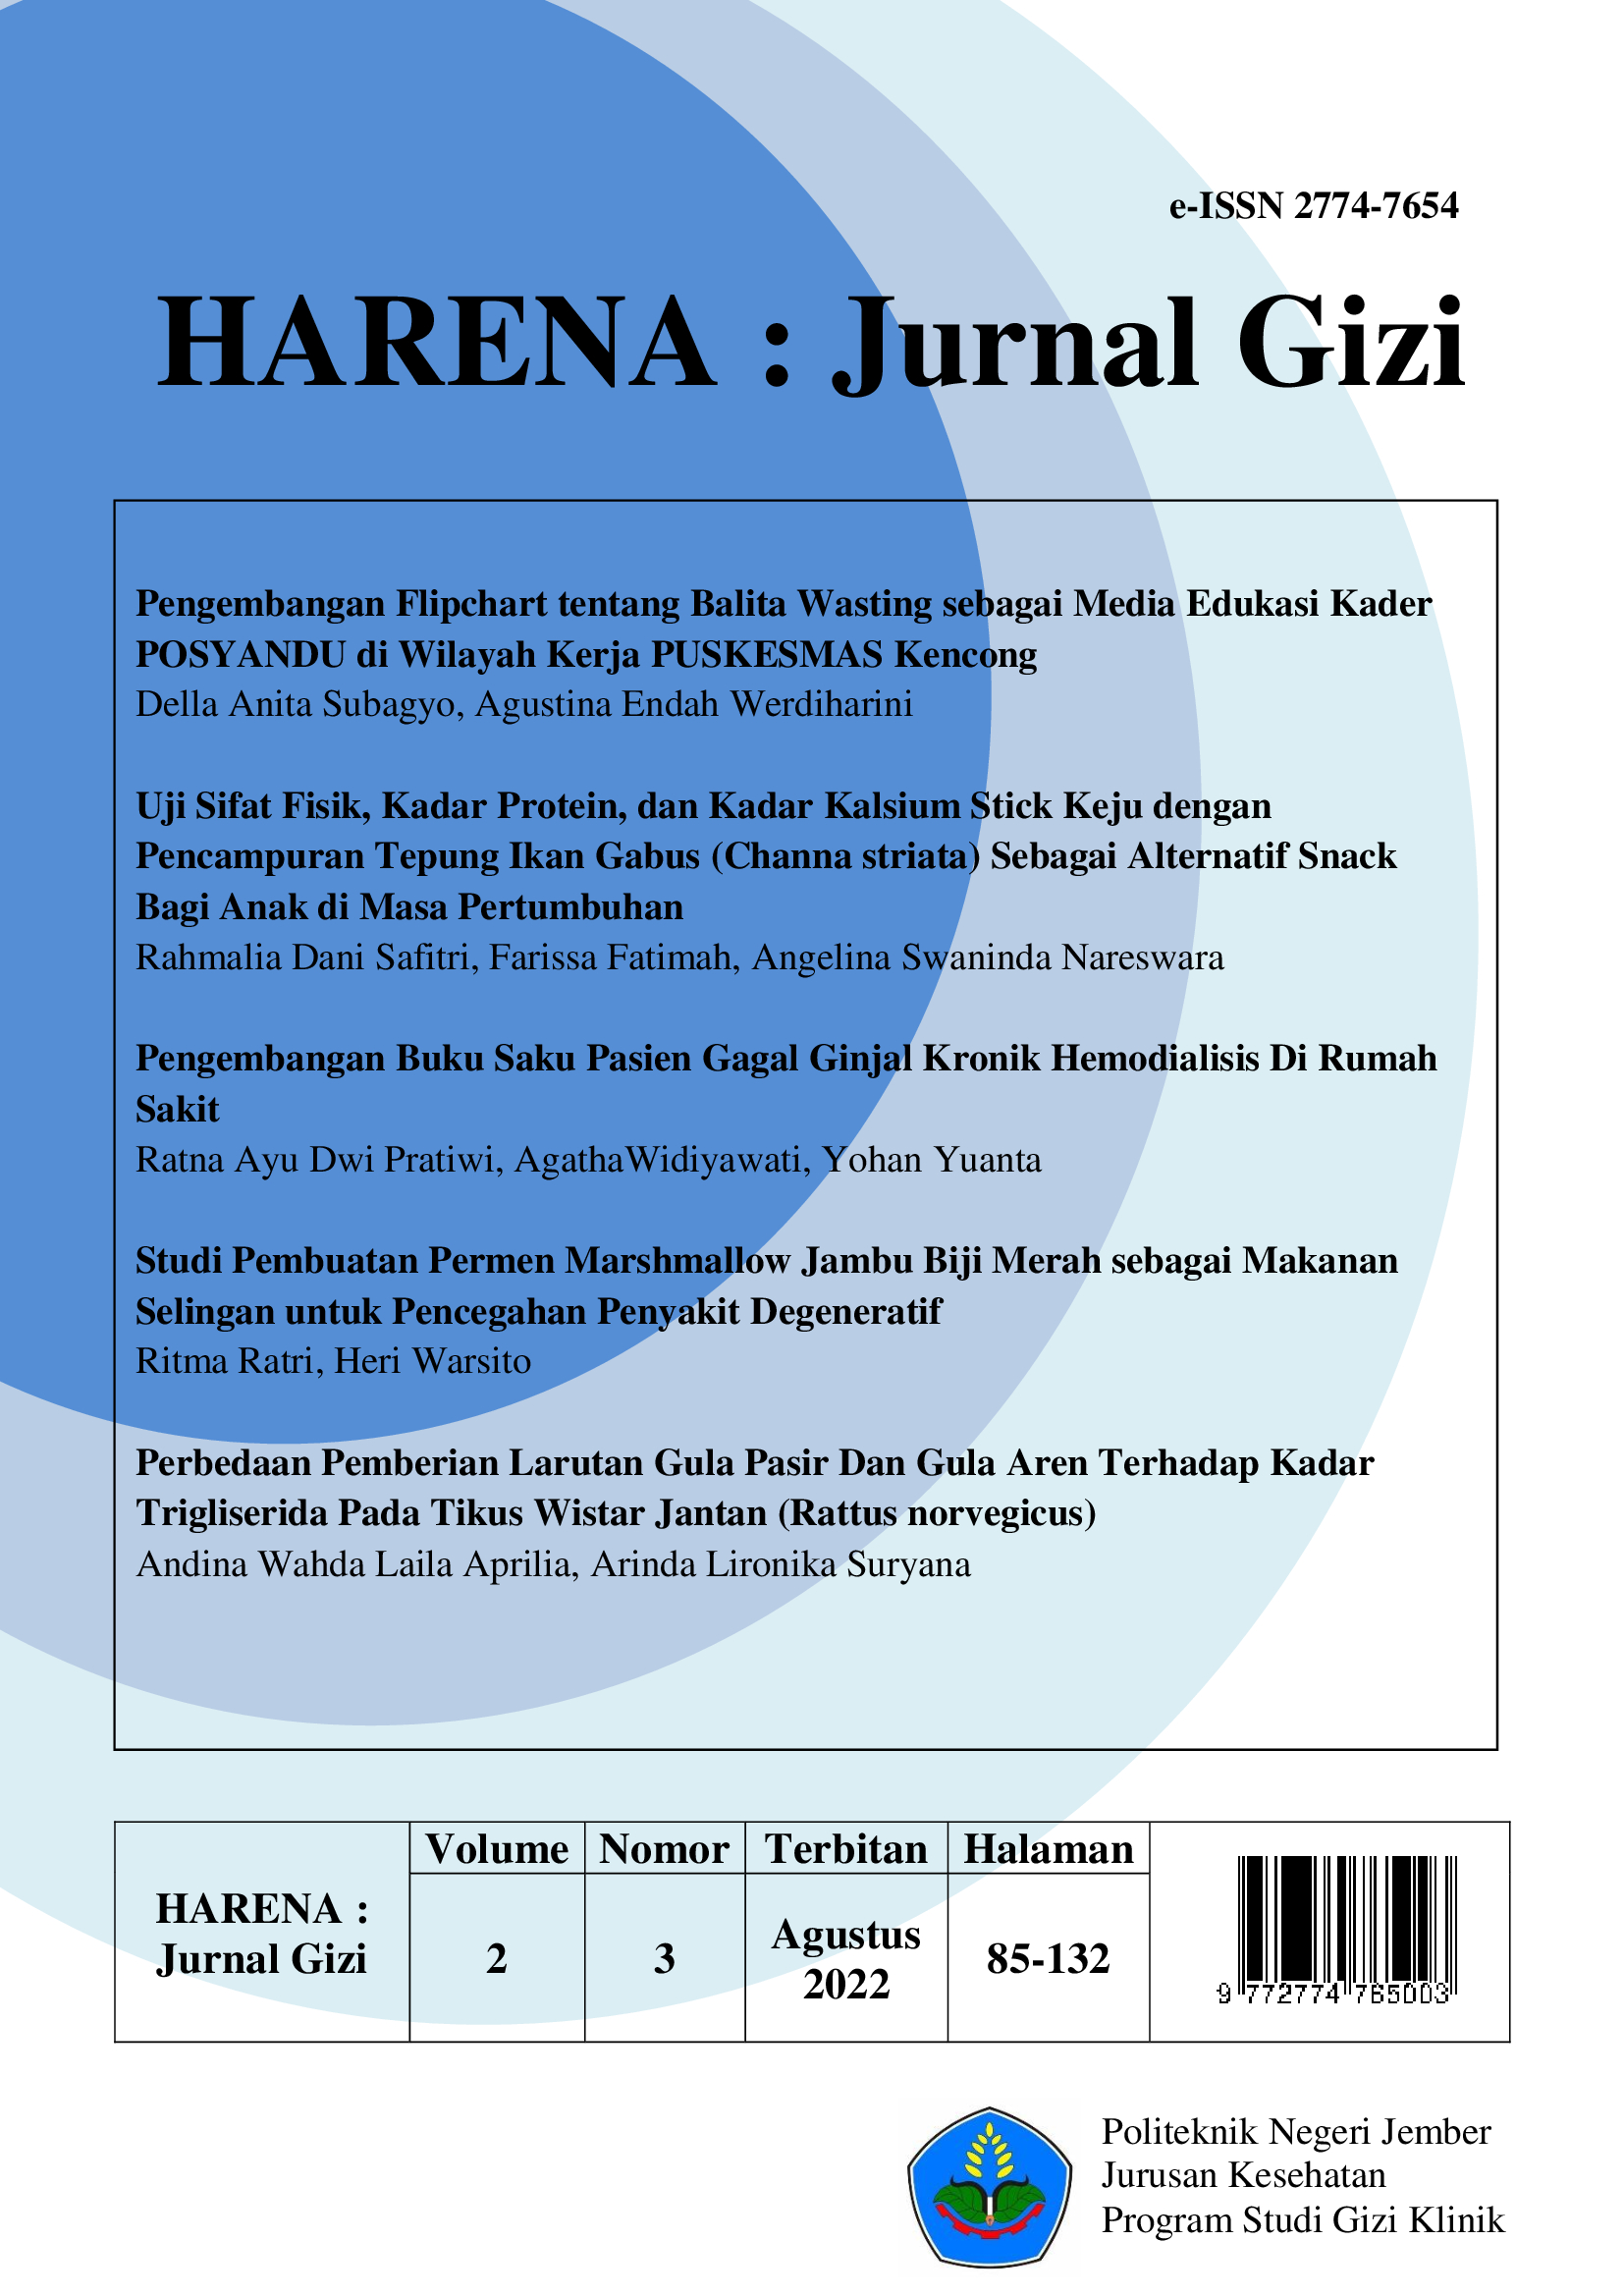 					View Vol. 2 No. 3 (2022): HARENA: Jurnal Gizi (Agustus 2022)
				